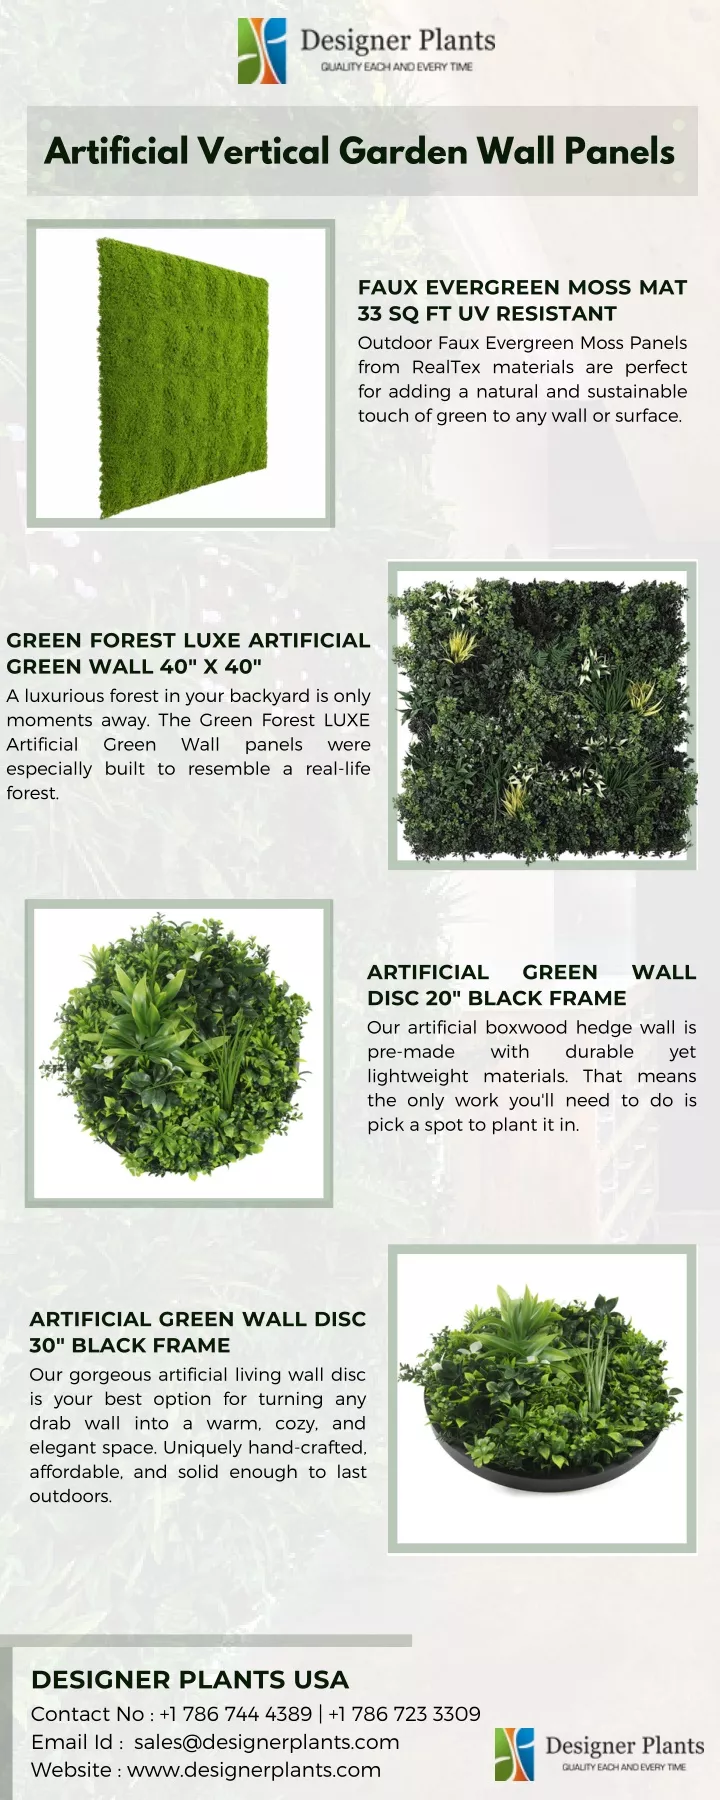 artificial vertical garden wall panels for adding